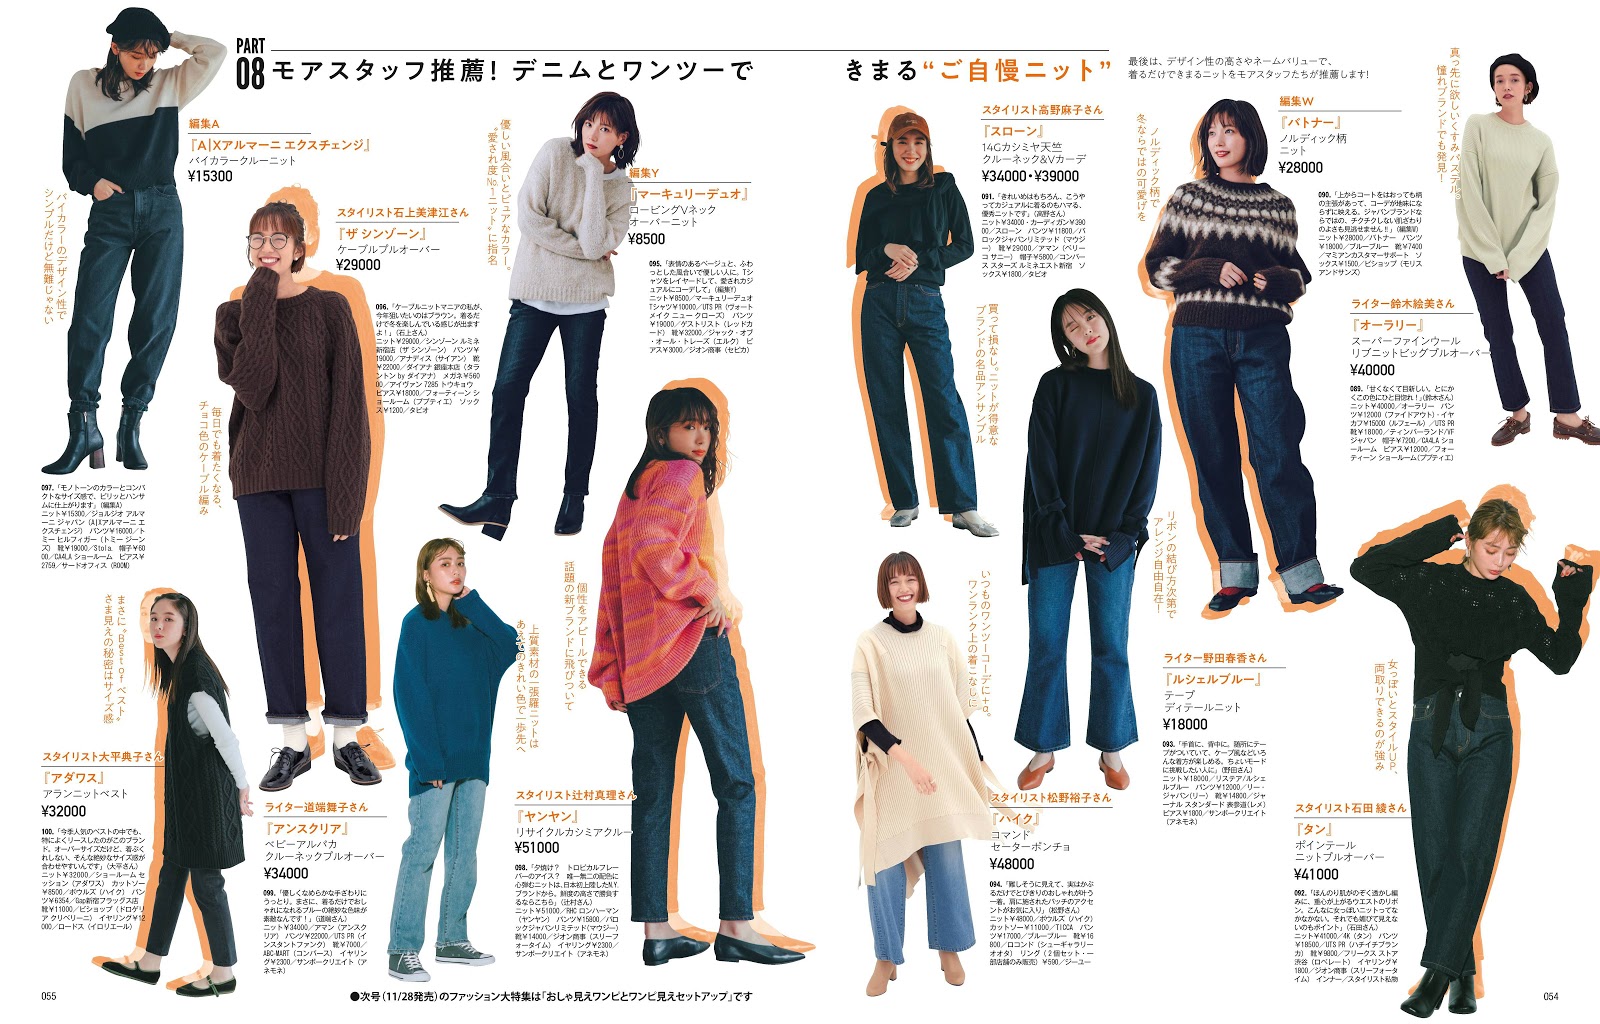 Tsubasa Honda 本田翼, Maquia Magazine 2020.01